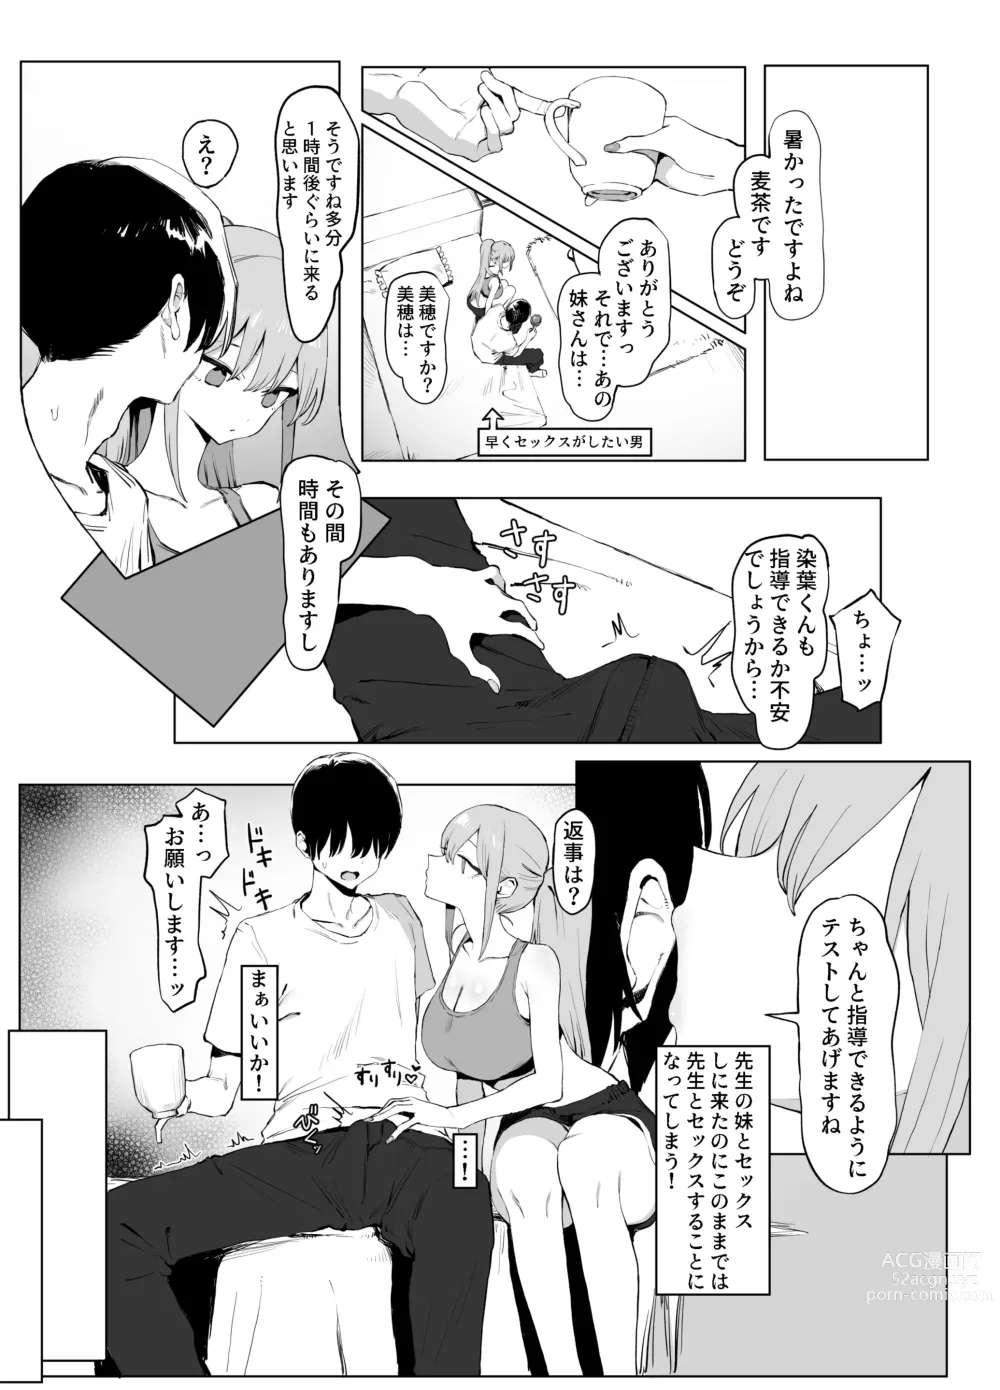 Page 8 of doujinshi Seikoui Jisshuu 2